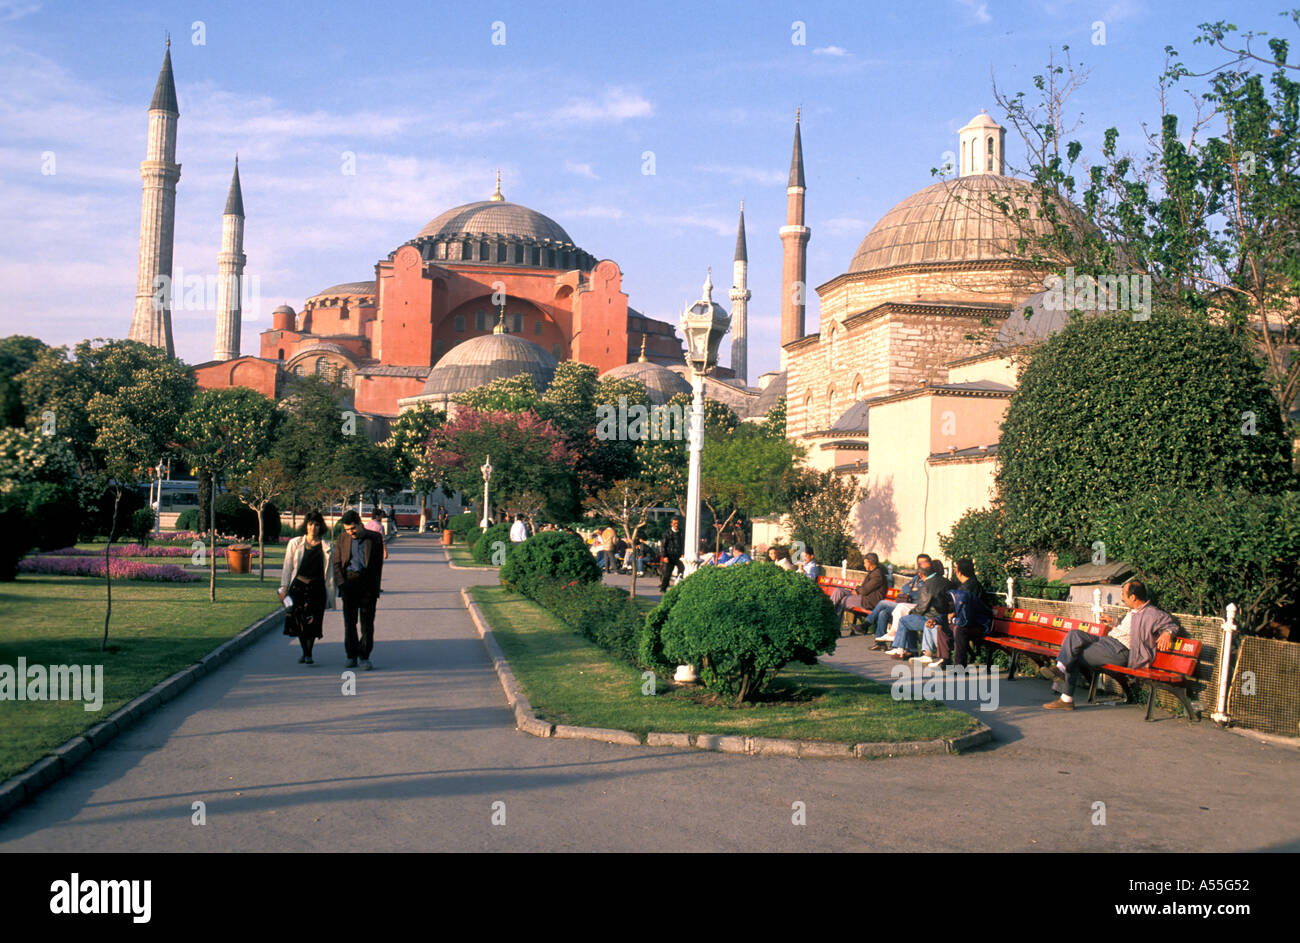 Europe Turkey Istanbul Red Mosque Hagia Sophia Moslem religion architecture minaretts prayer Islam Stock Photo